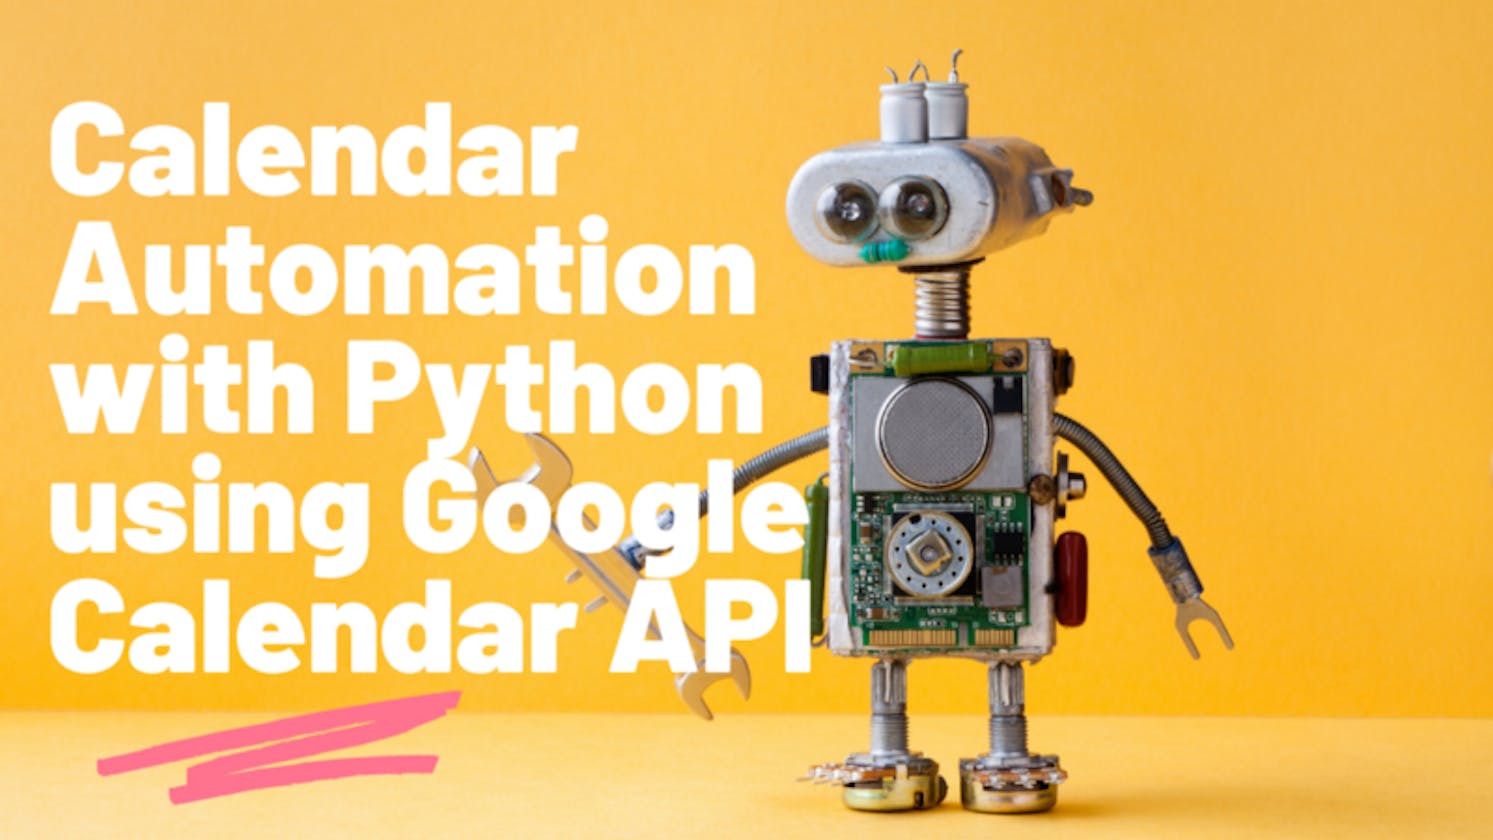 Calendar Automation with Python using Google Calendar API and OAuth2